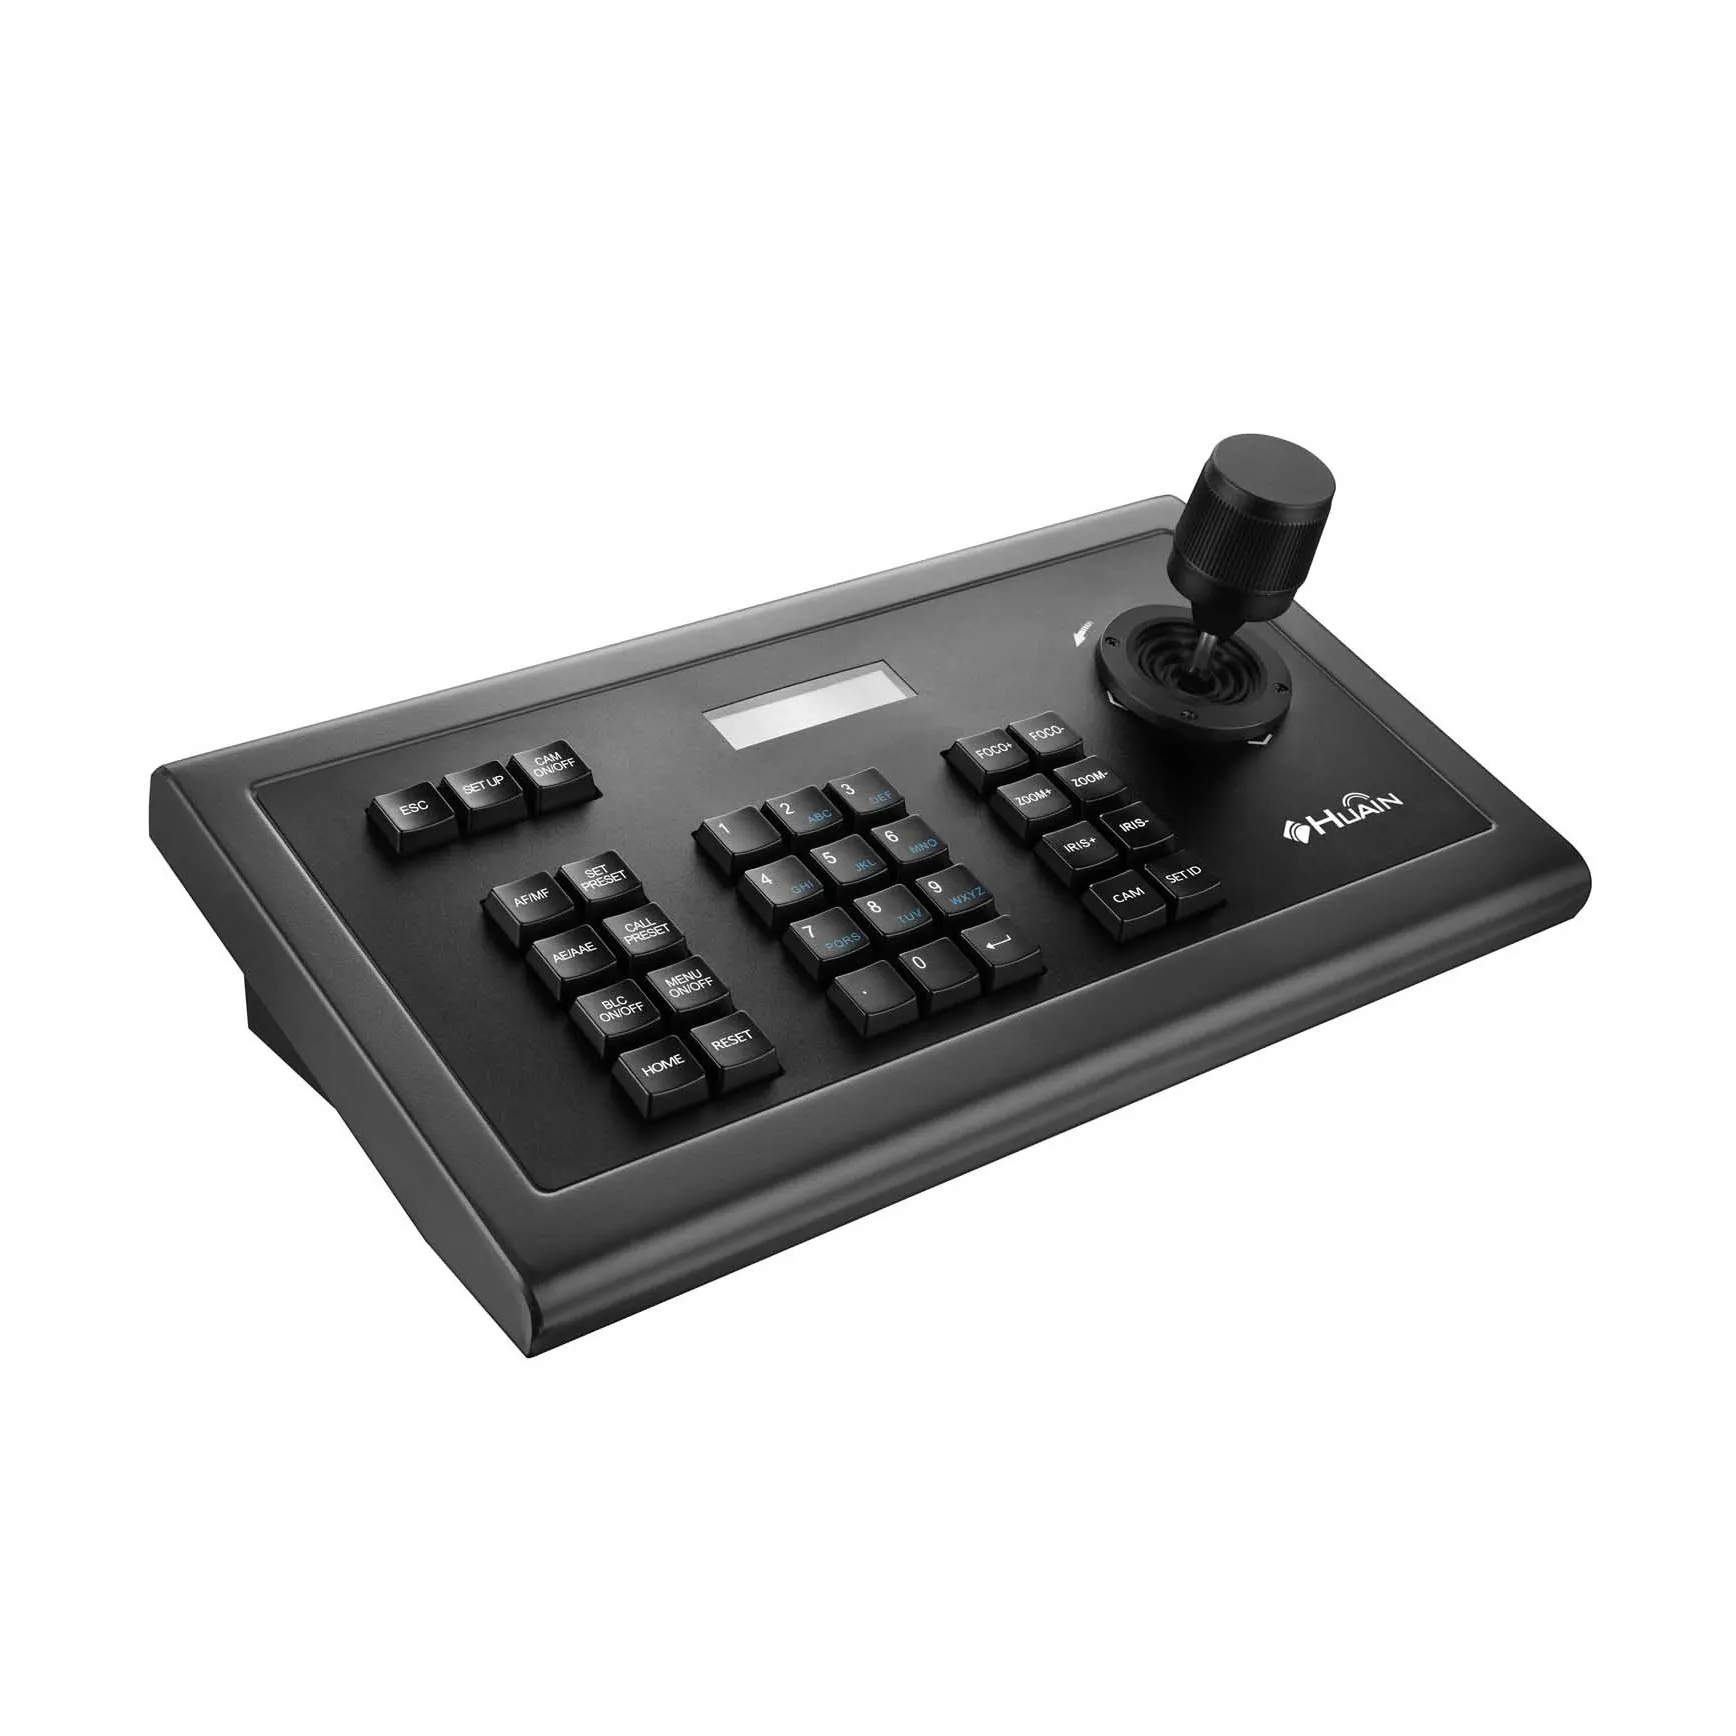 keyboard ptz joystick keyboard controller for video conference camera